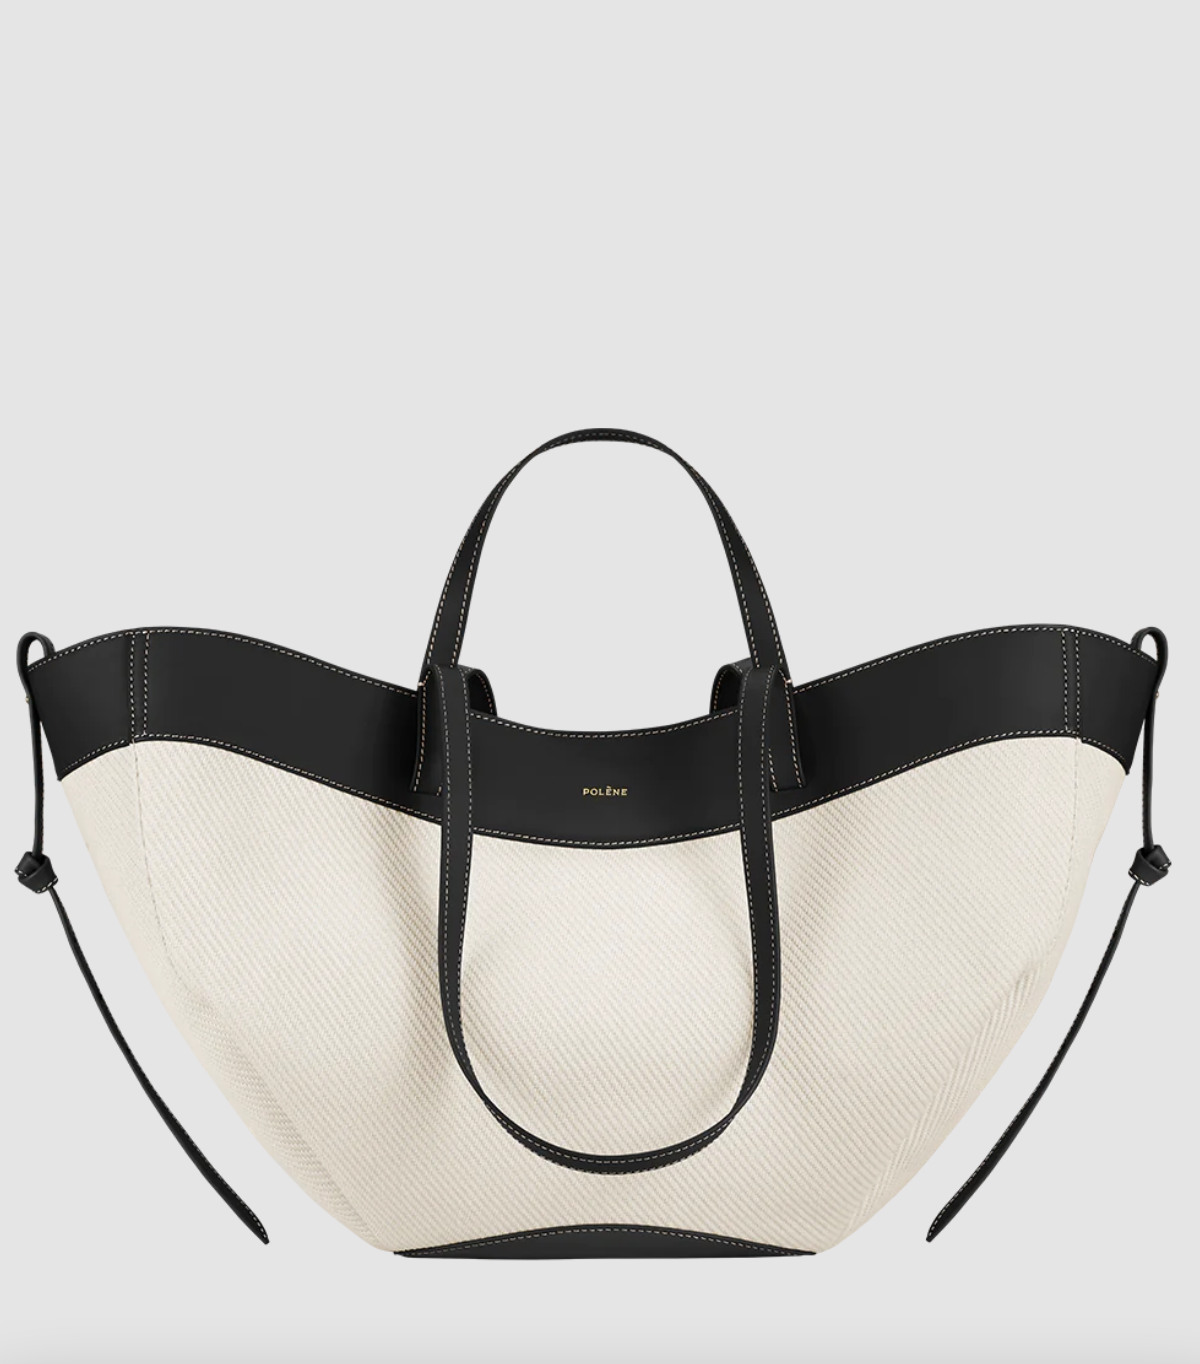 Baffled Zara shoppers brand £19.99 'flower carrying bag' an